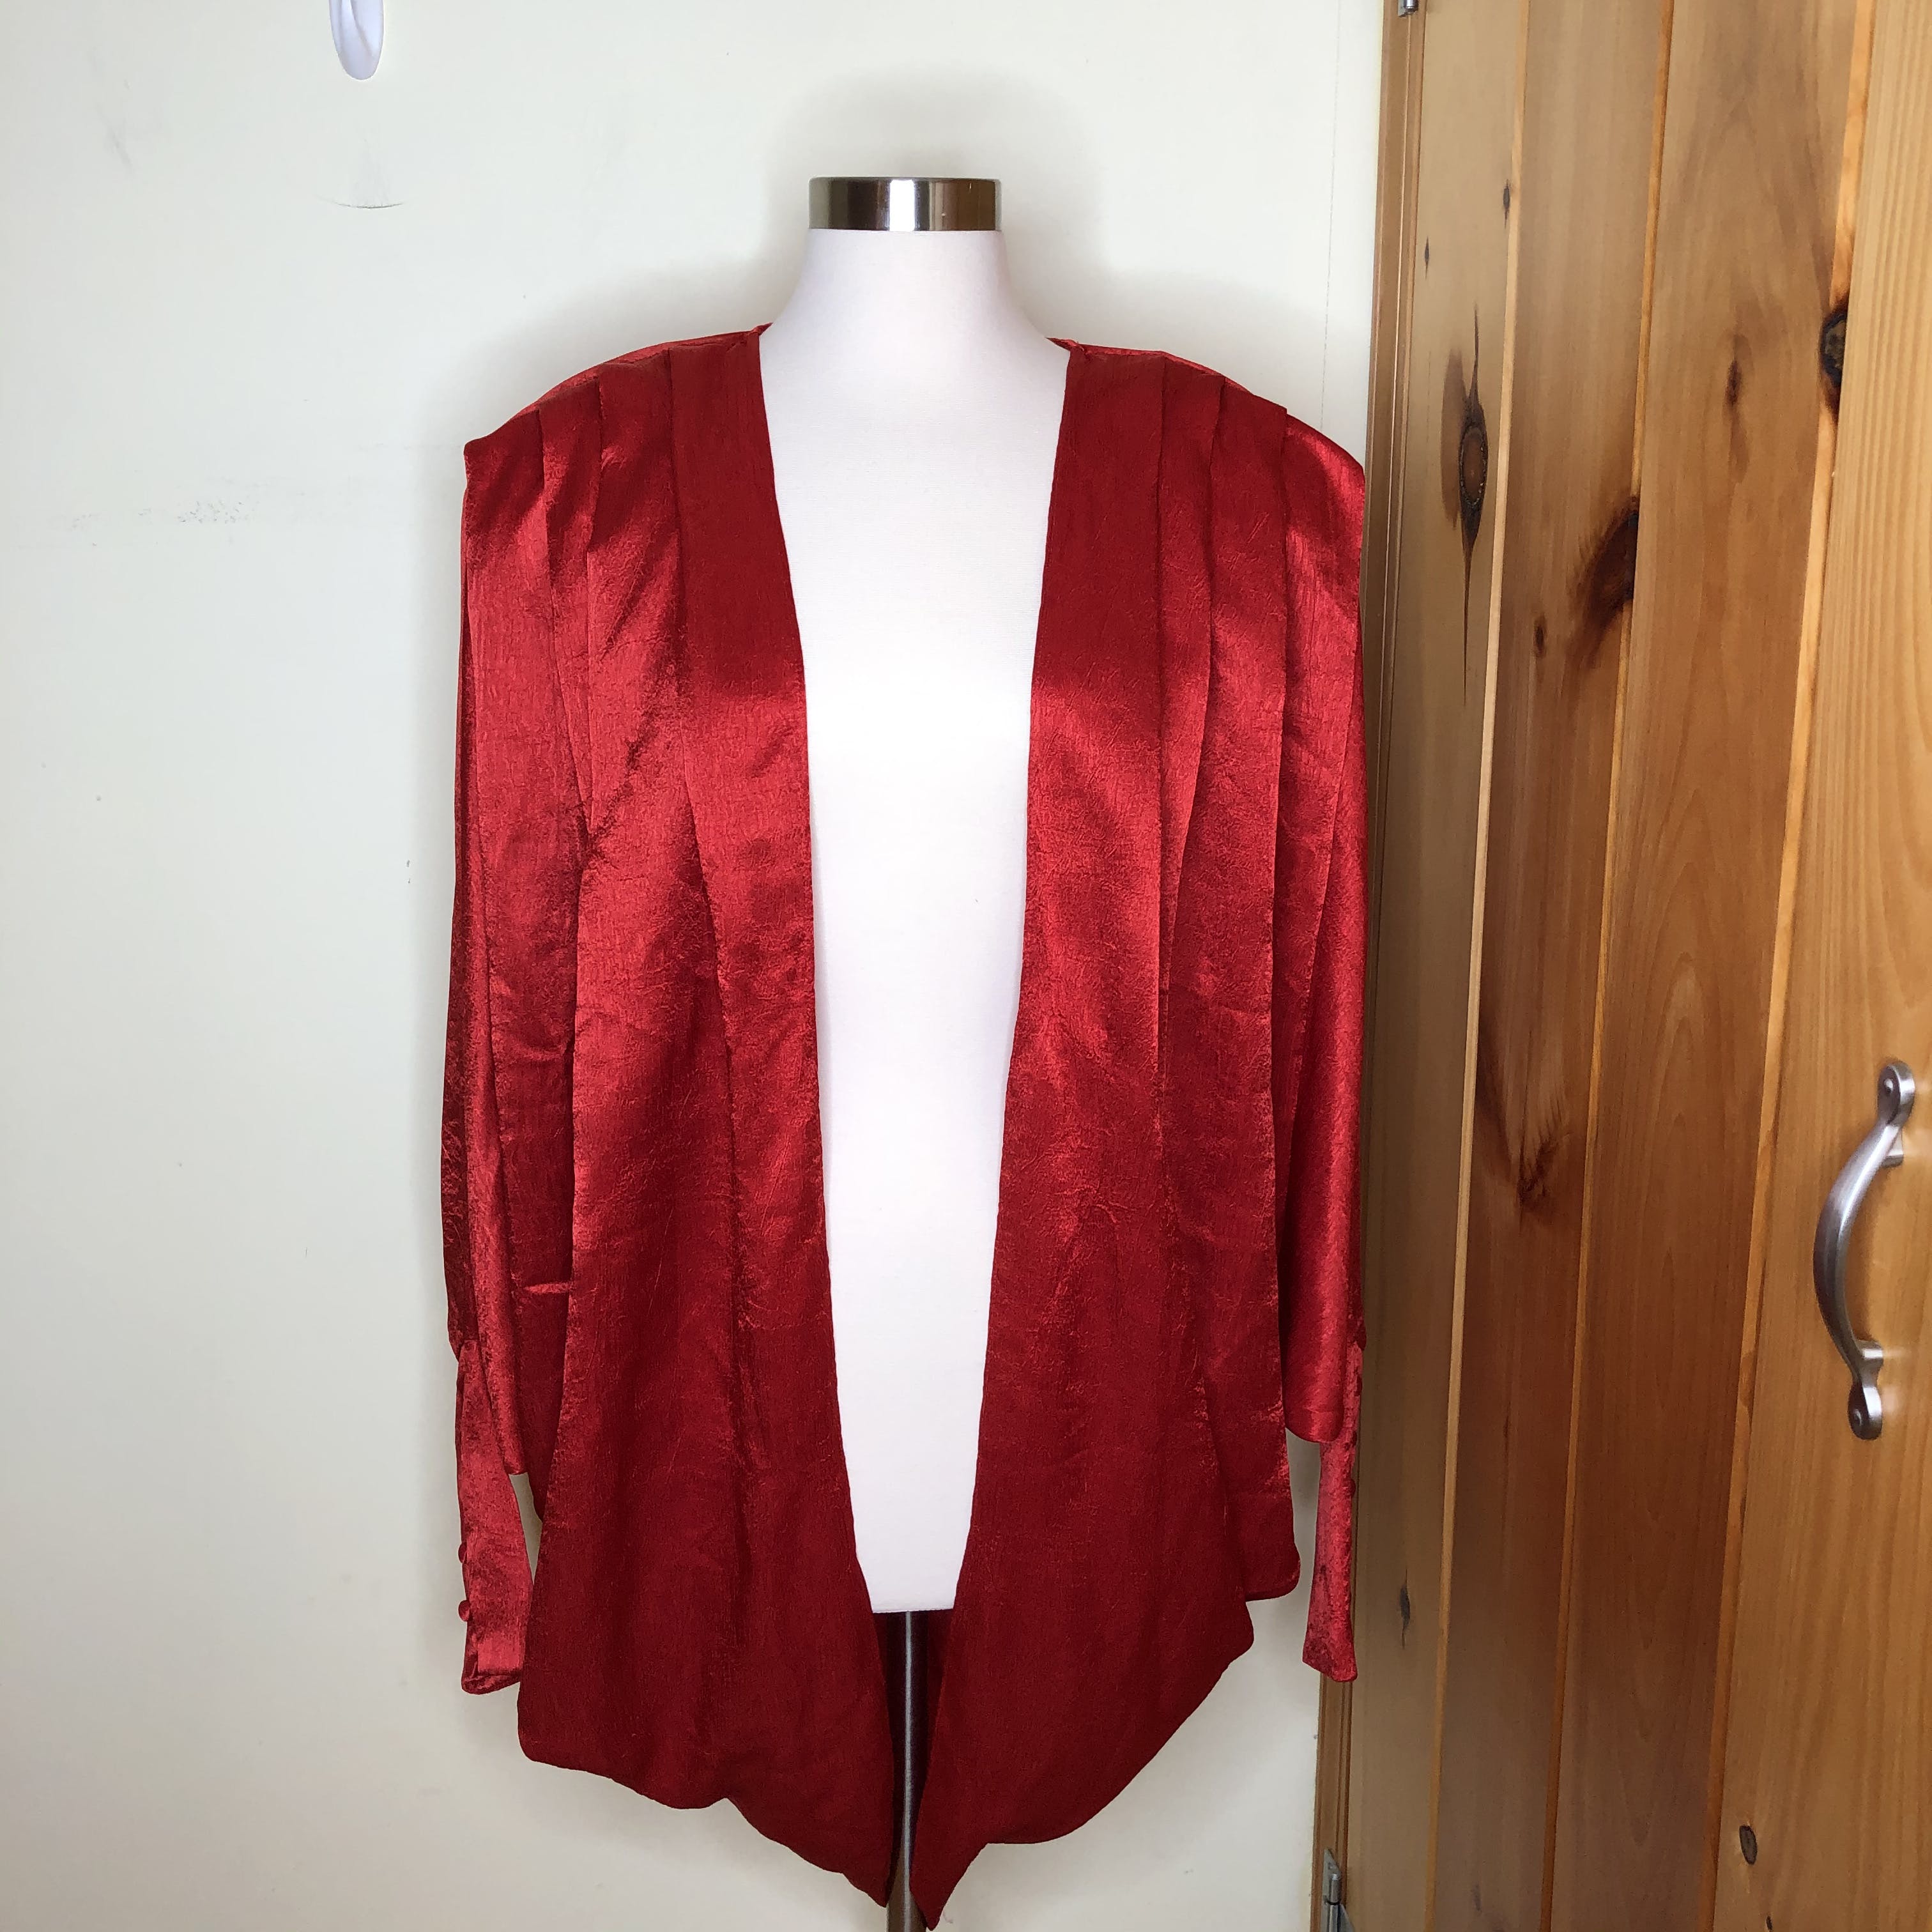 Vintage Shiny Red Robe by Samantha Black | Shop THRILLING